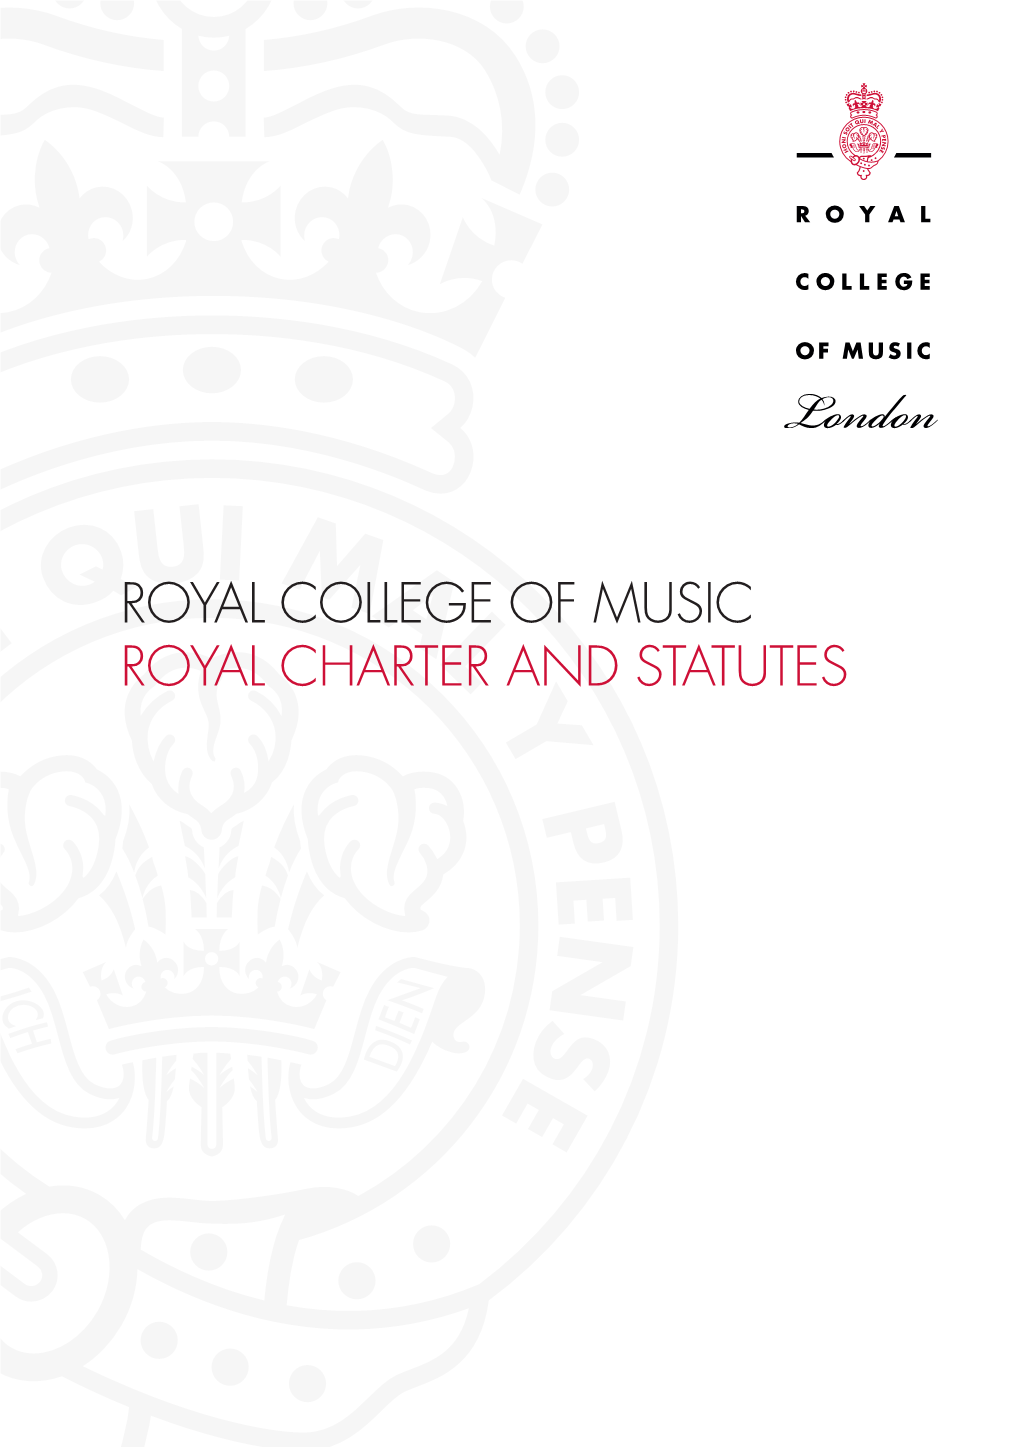 Royal Charter and Statutes